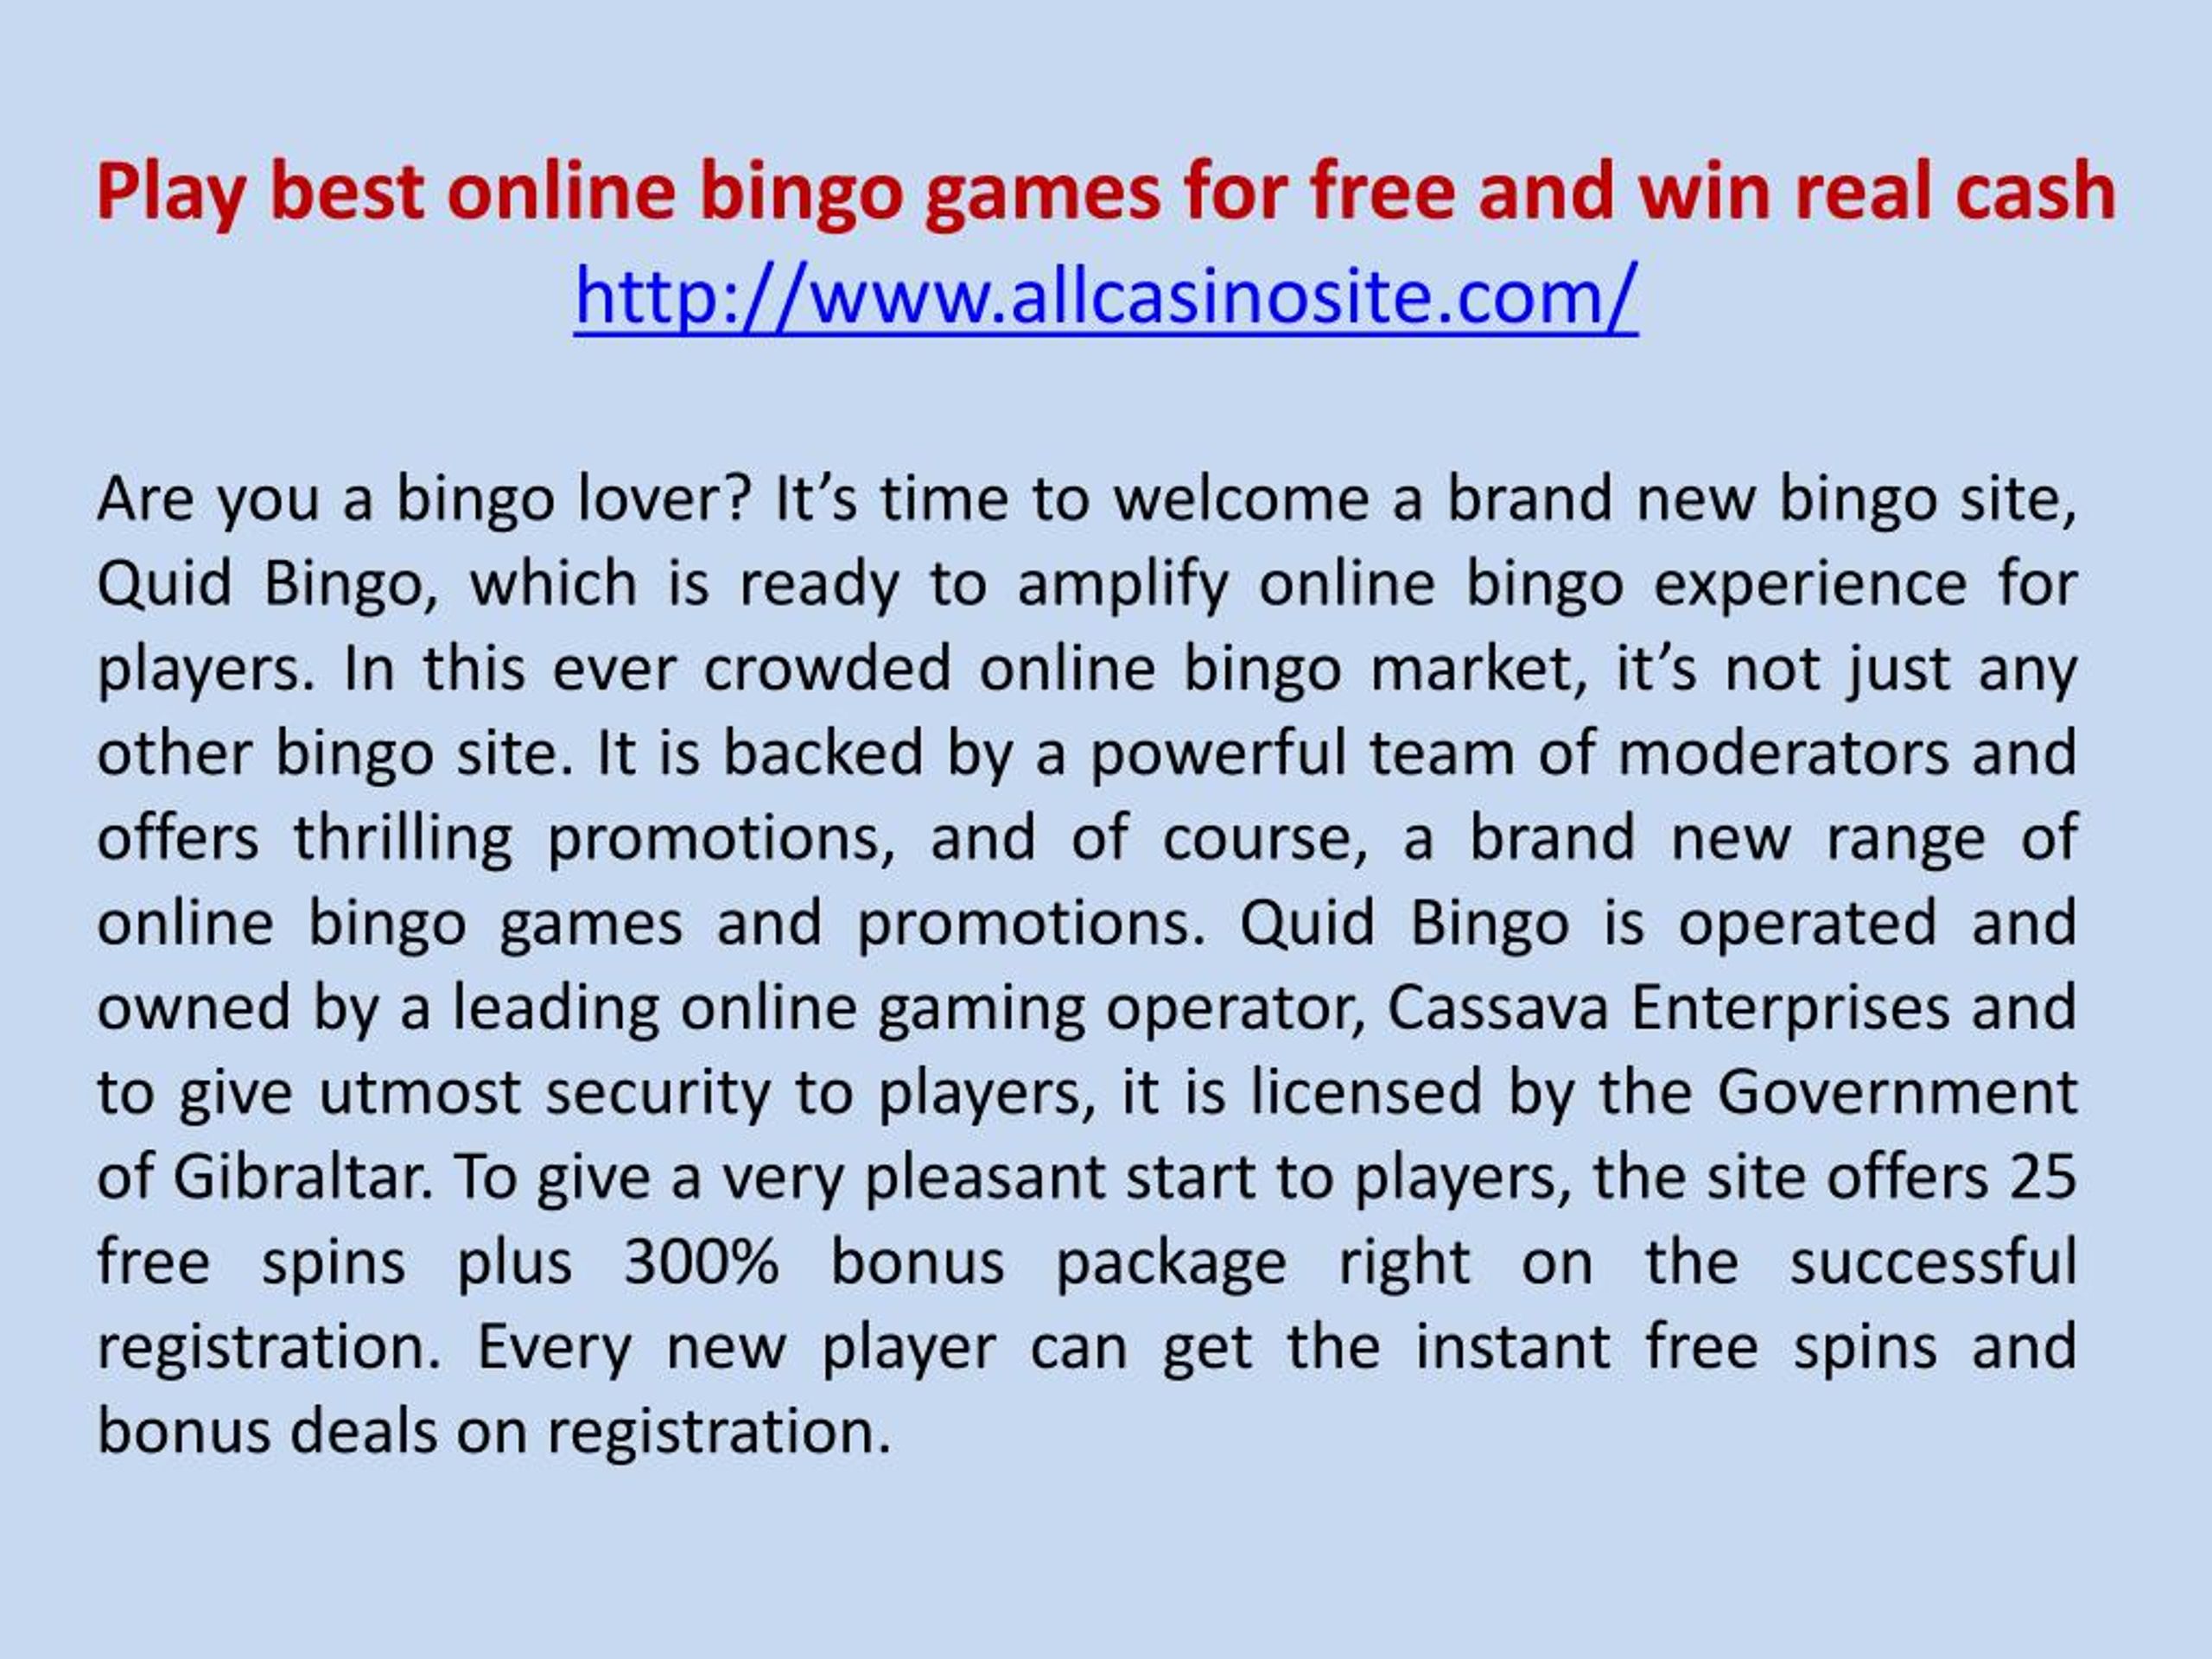 Win money playing bingo online, free games